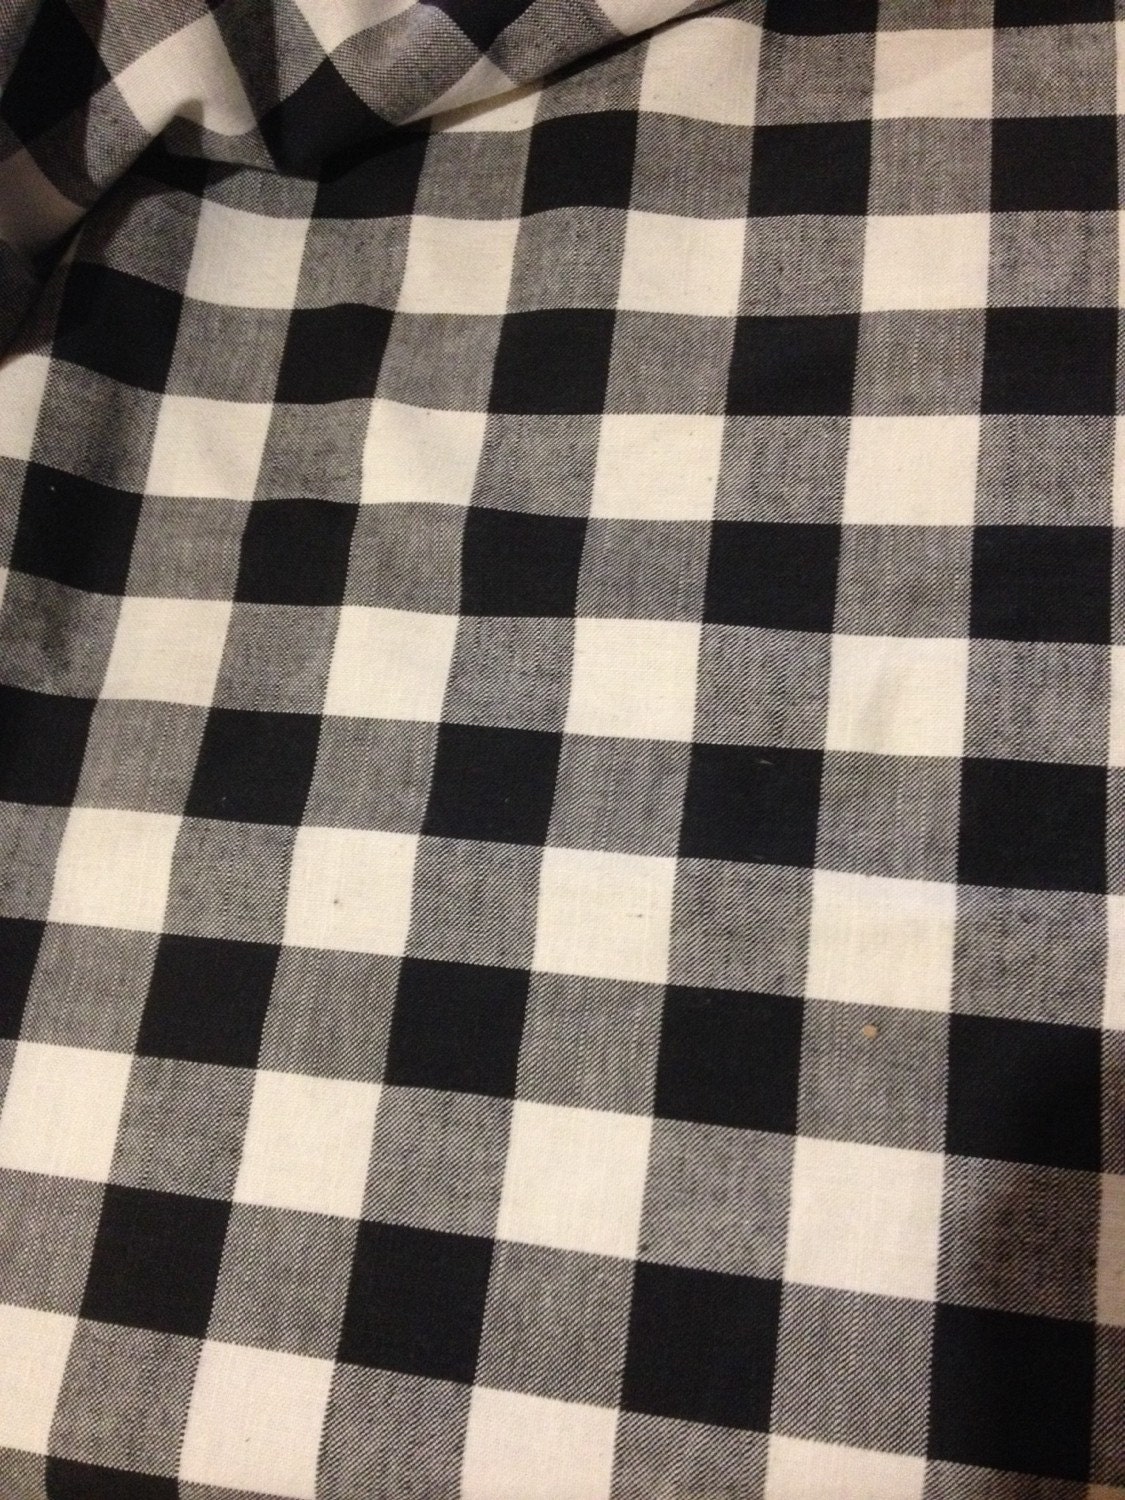 Black & white checkered Fabric linen-like 4 yards x 52